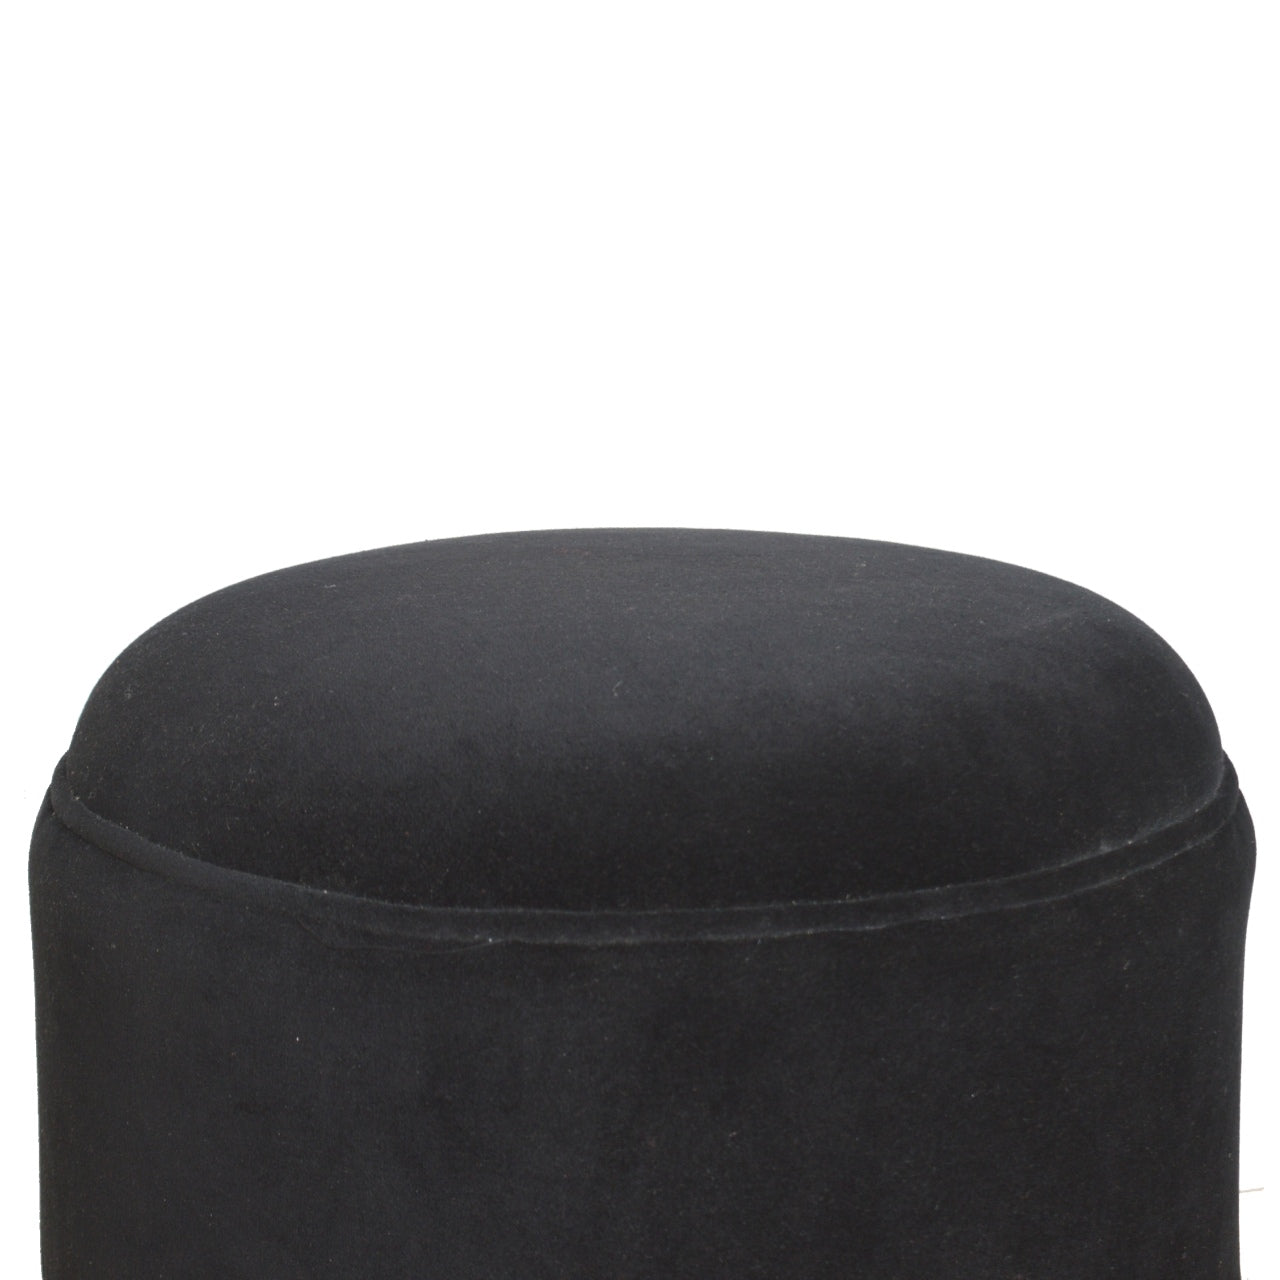 Black Velvet Nordic Style Solid Wood Footstool